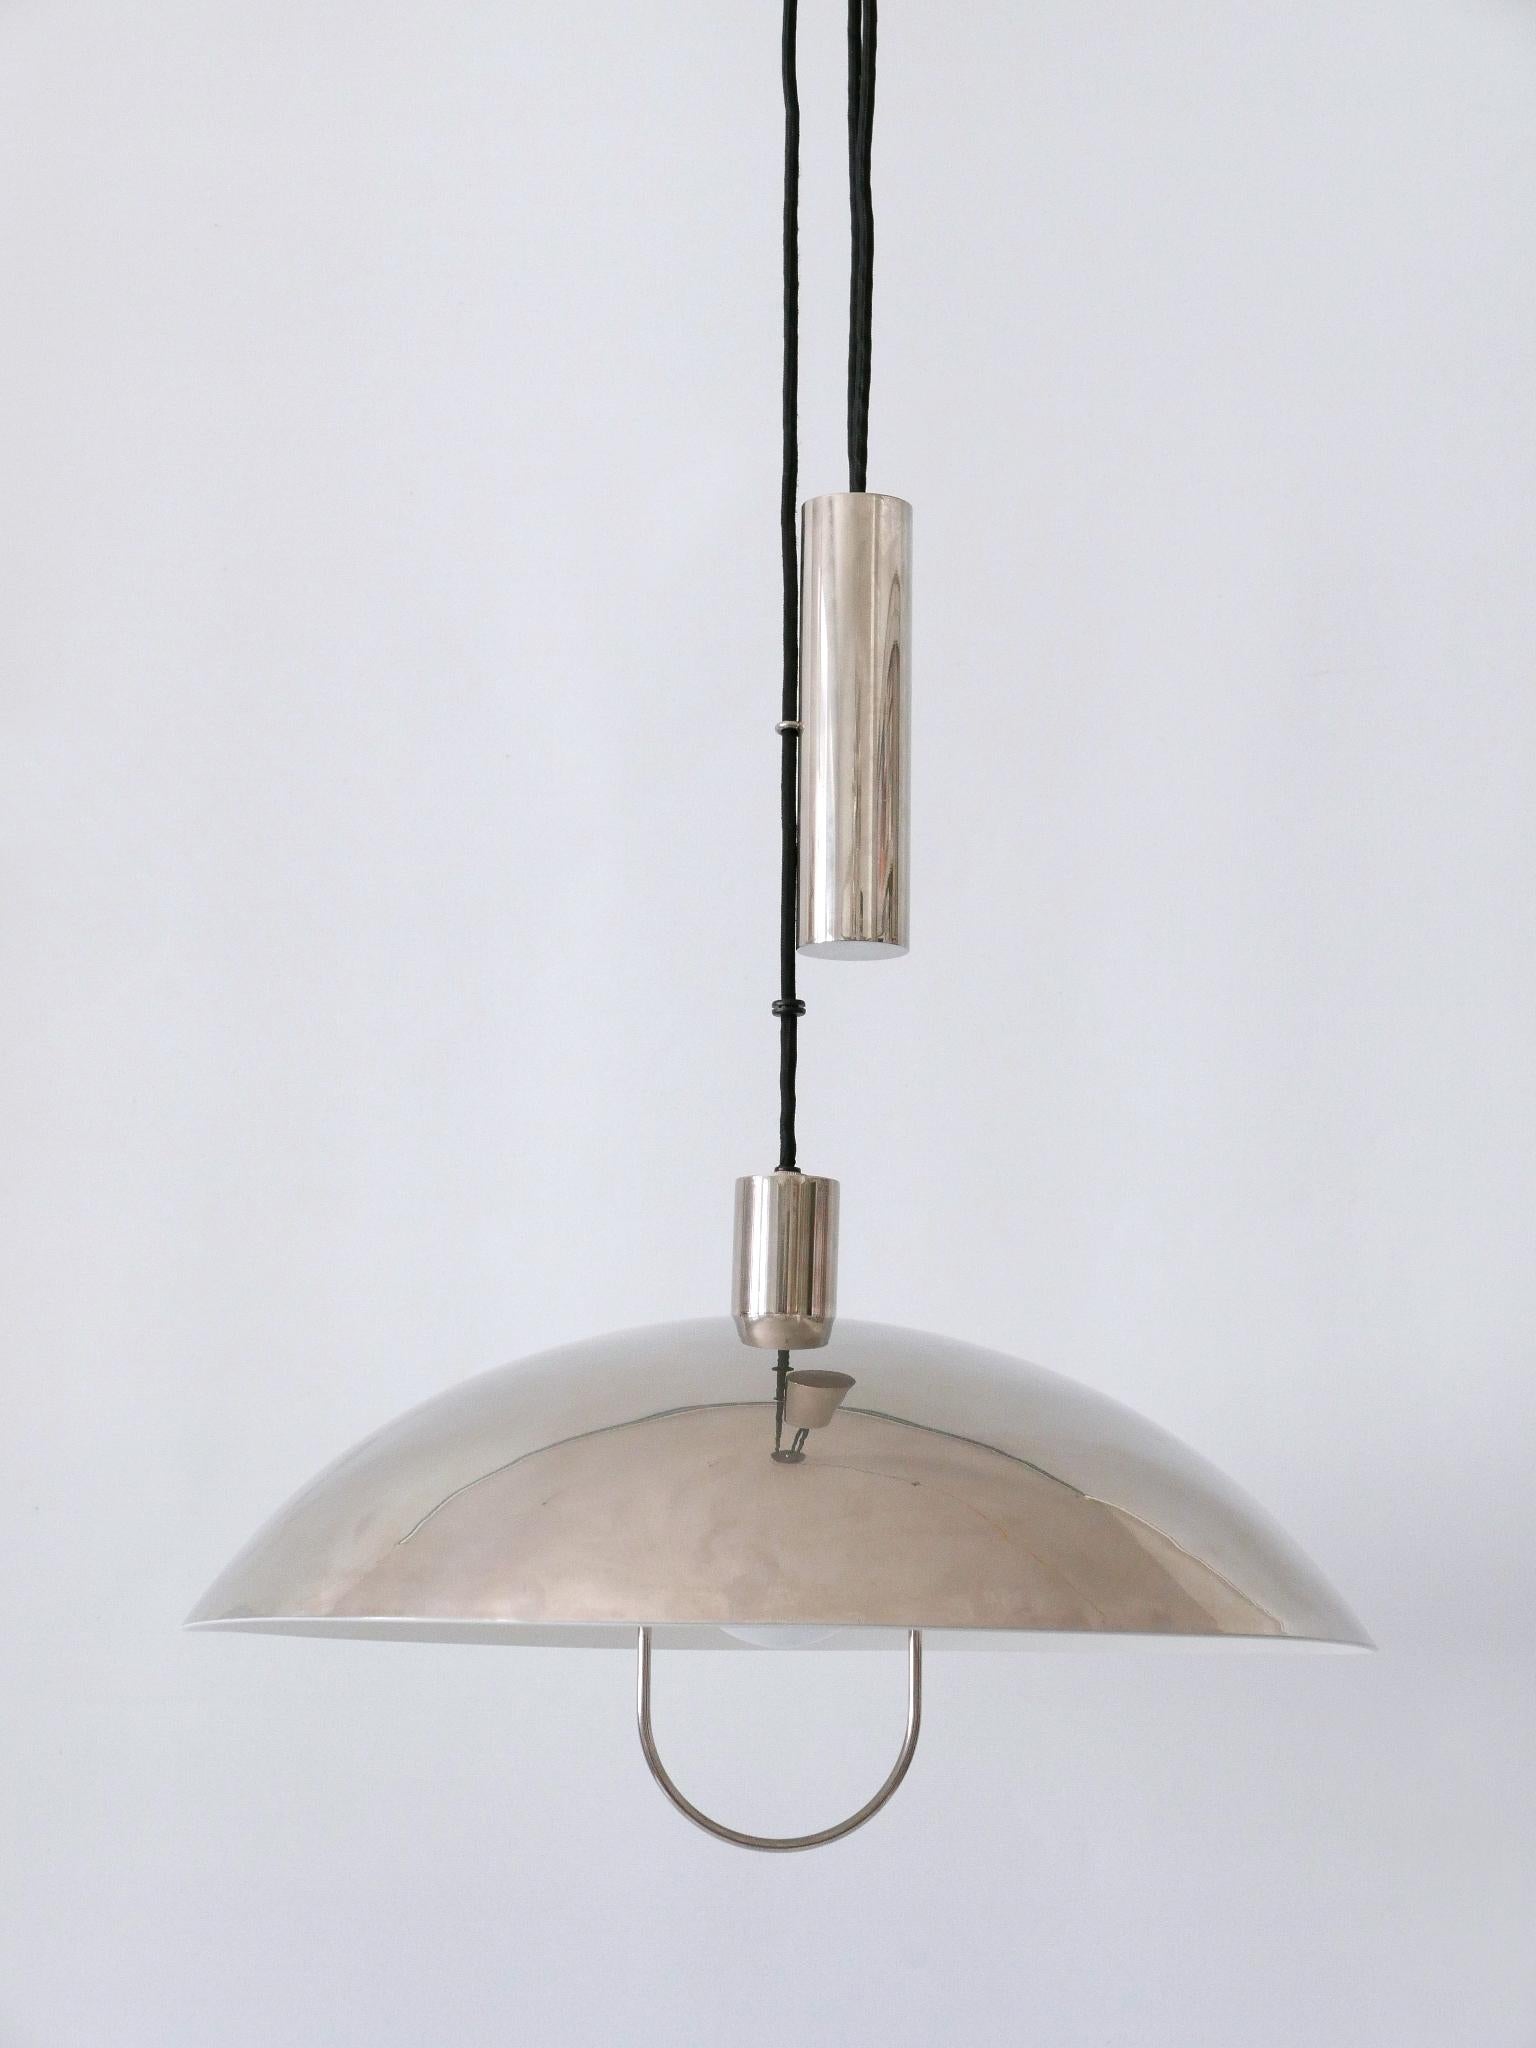 Aluminum Early Tecnolumen Pendant Lamp 'Bauhaus HMB 25/500' by Marianne Brandt 1980s For Sale